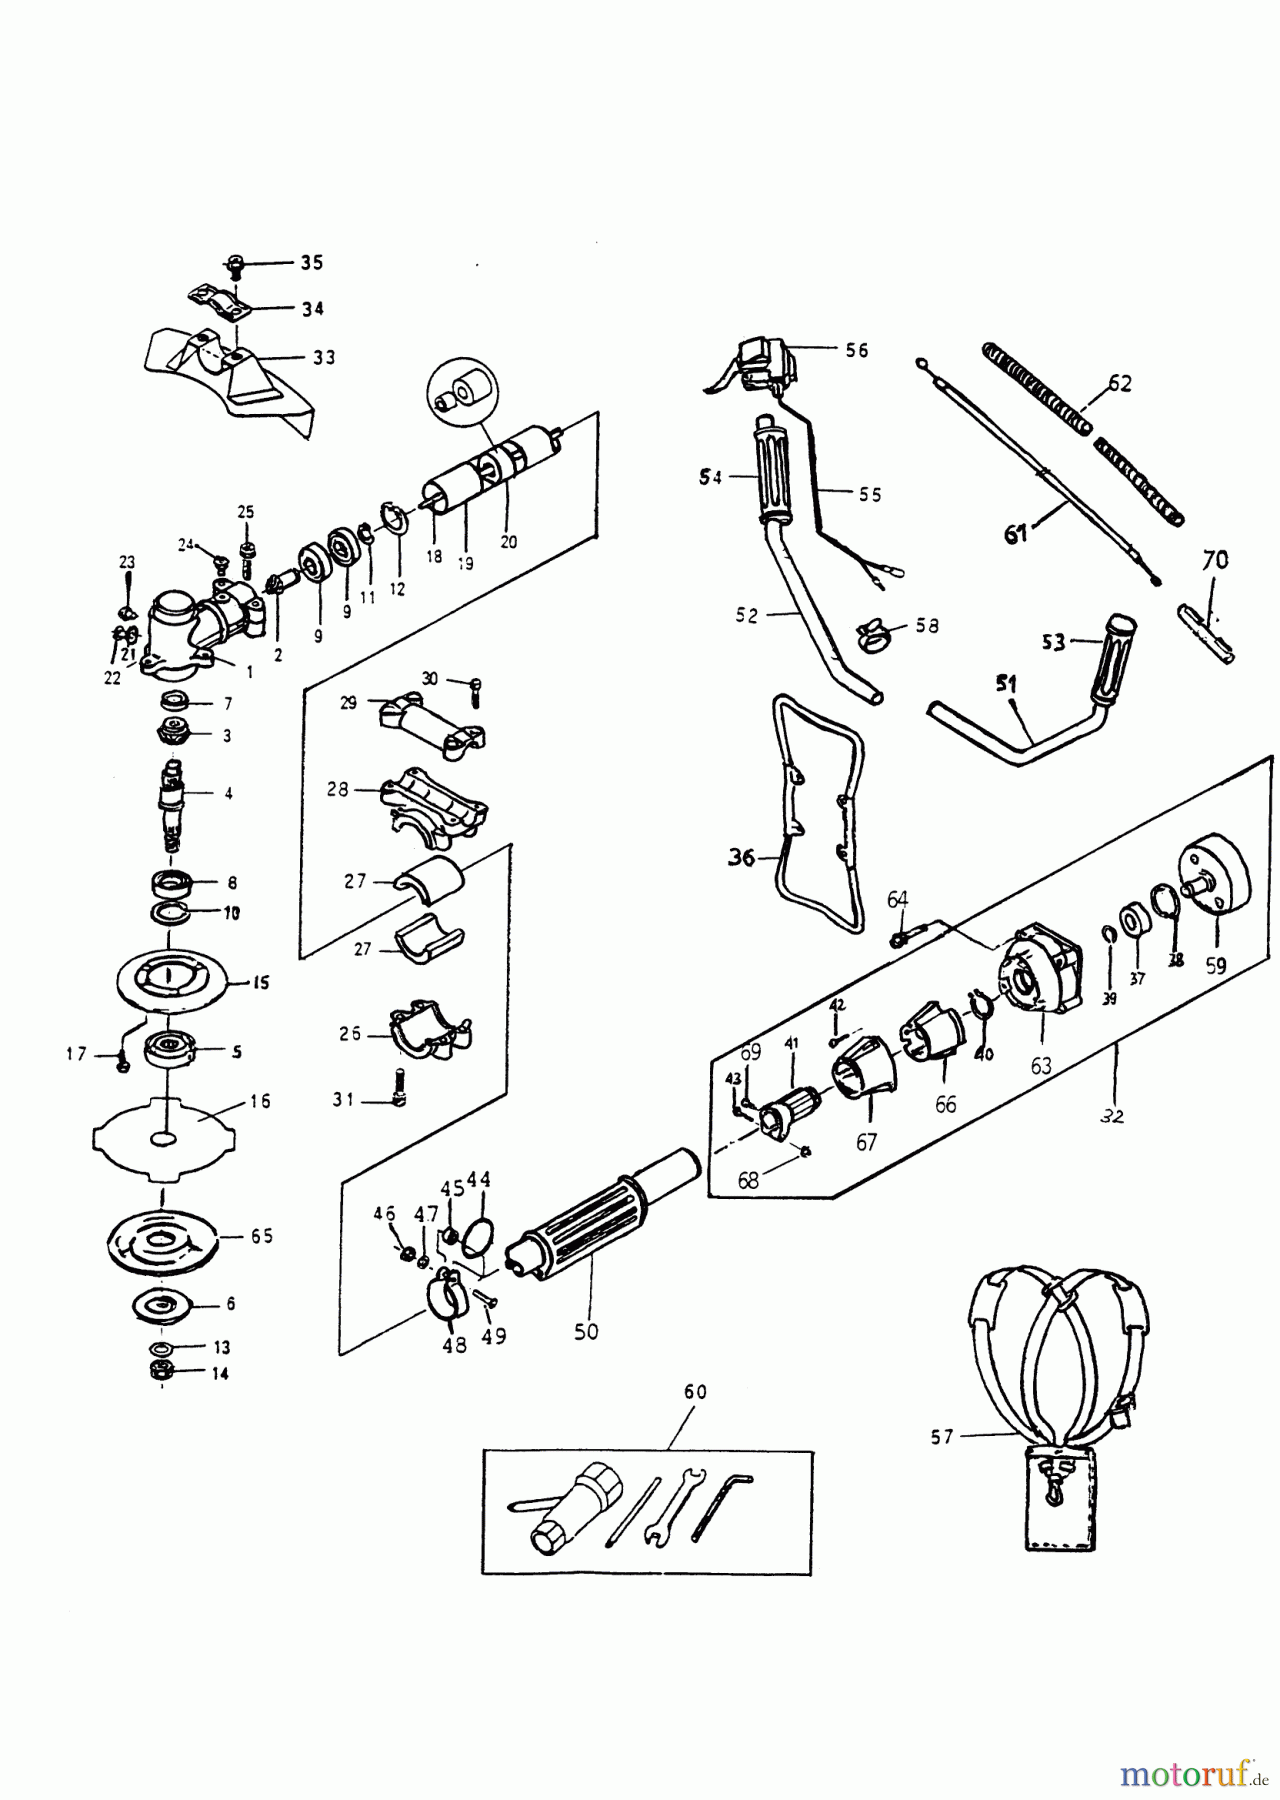  AL-KO Gartentechnik Motorsensen BC 330 T  03/1995 Seite 1